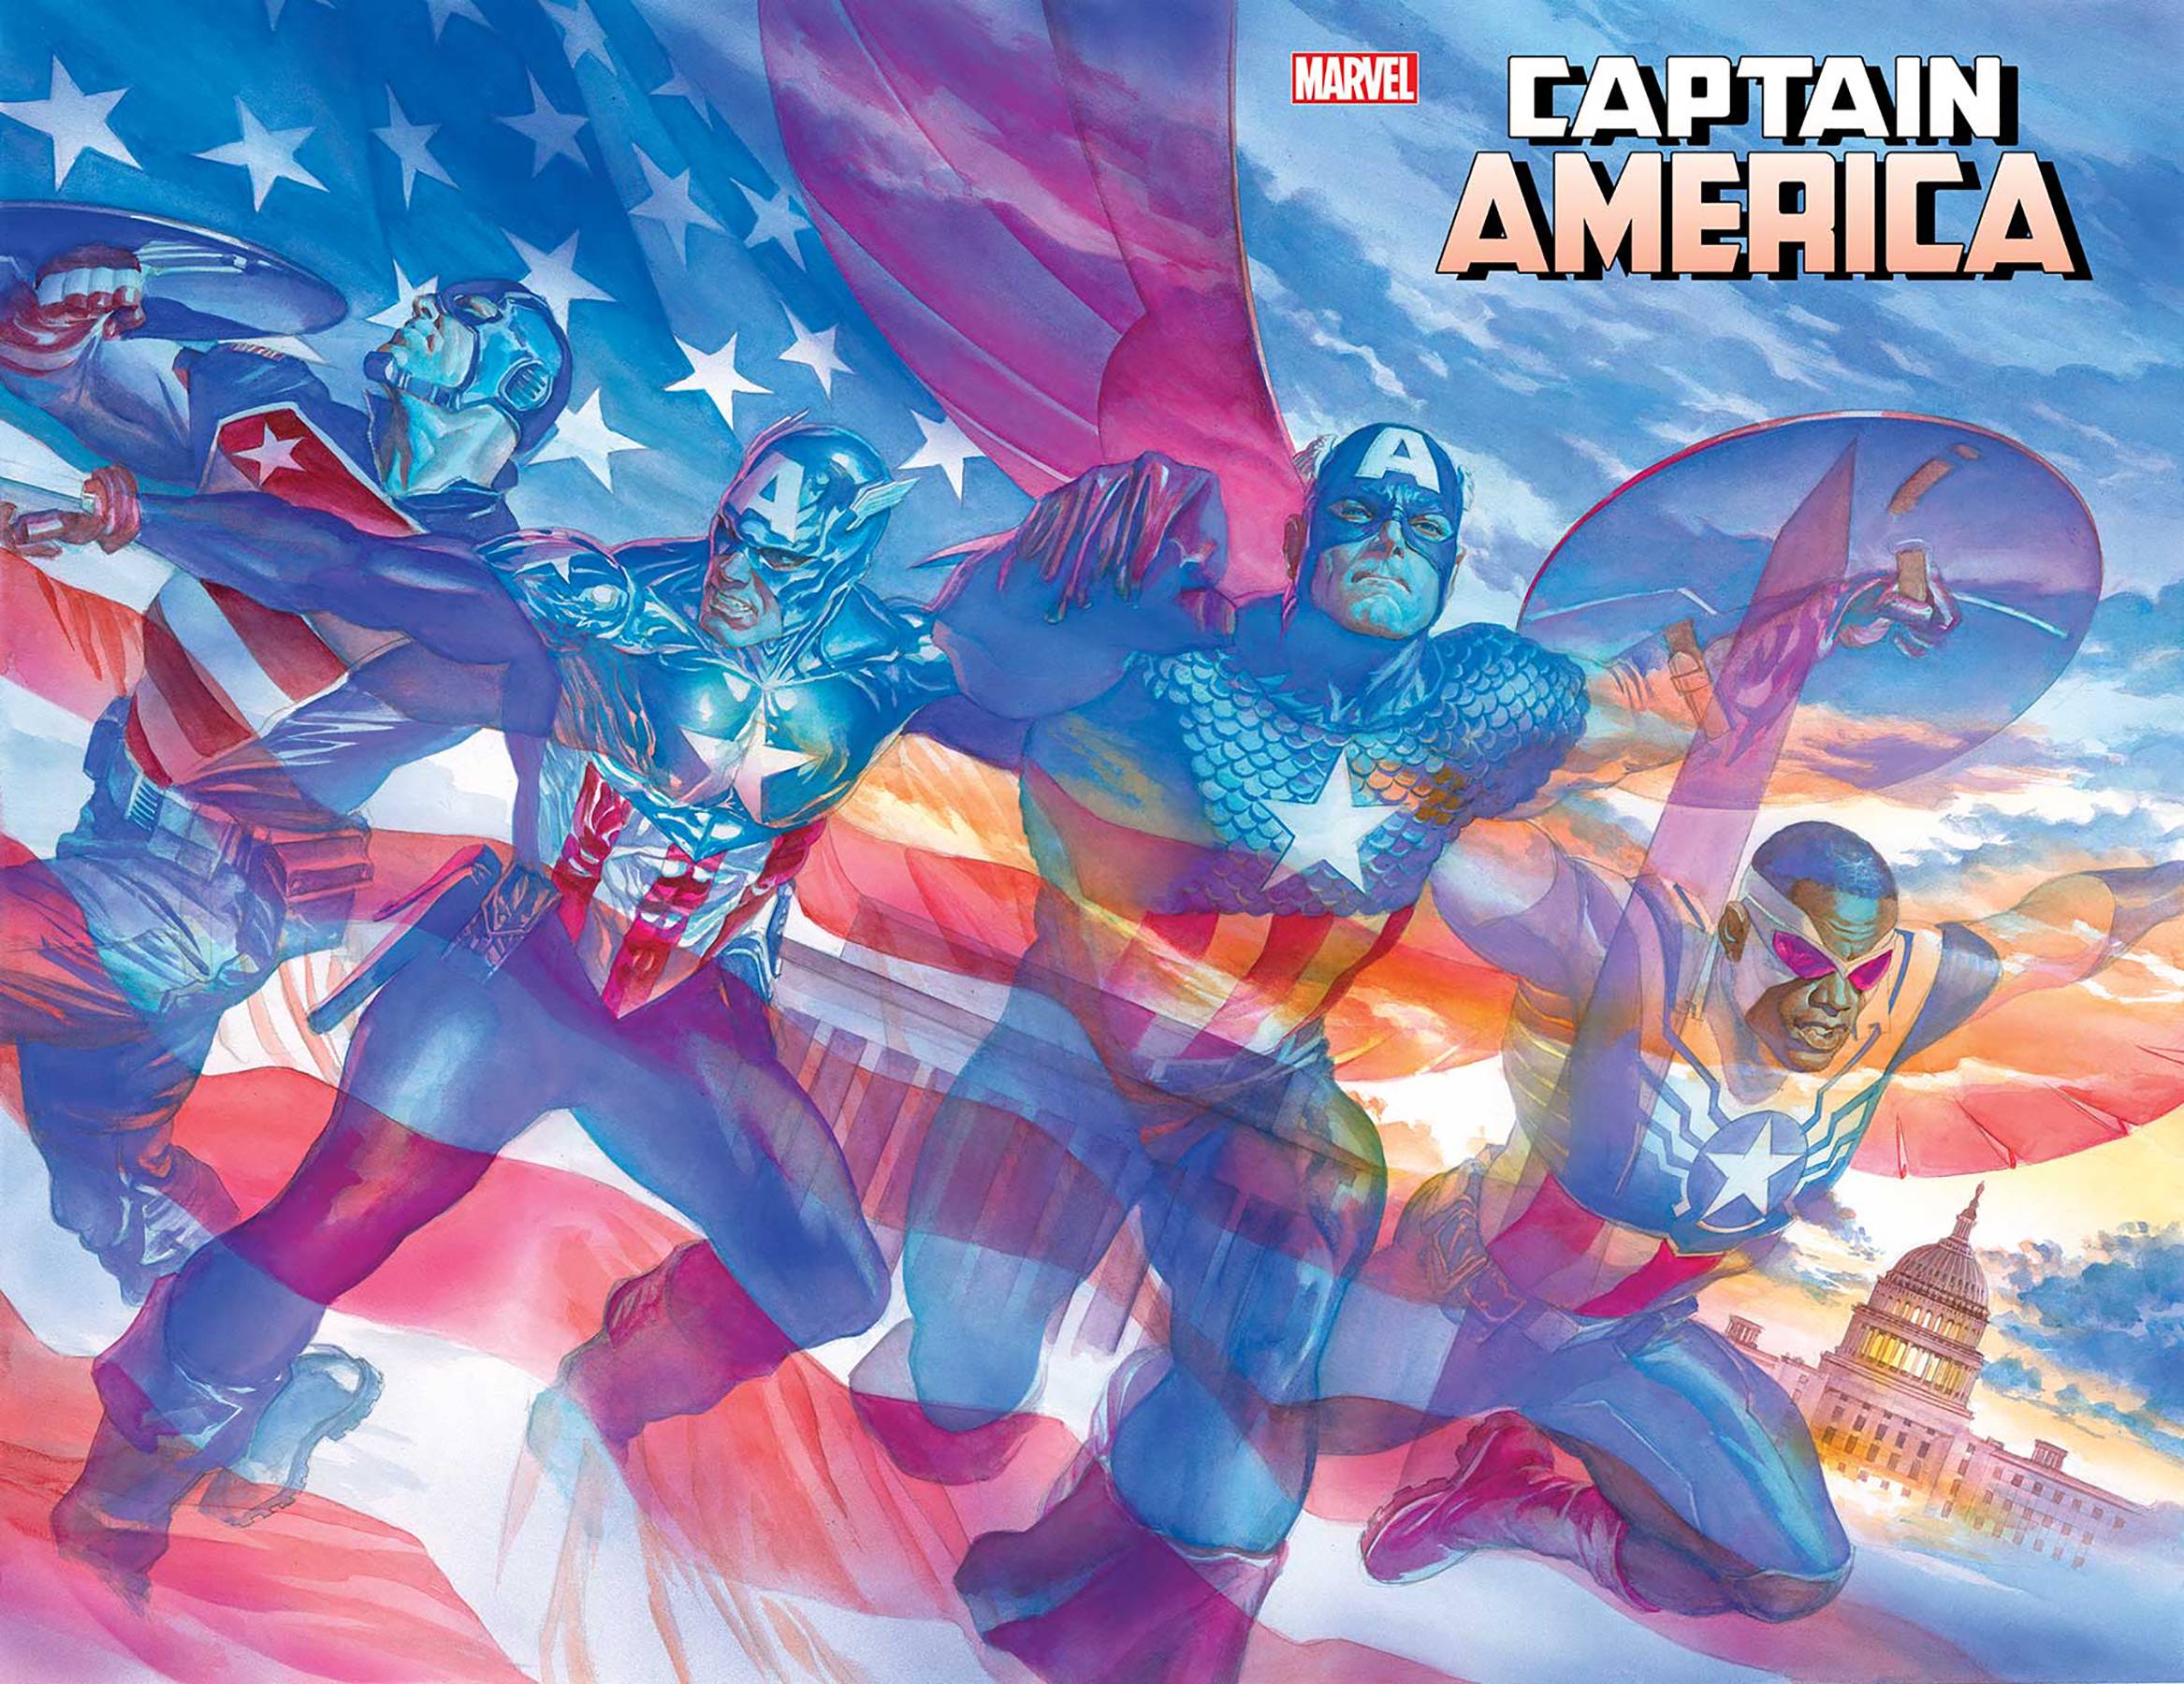 United States of Captain America #1